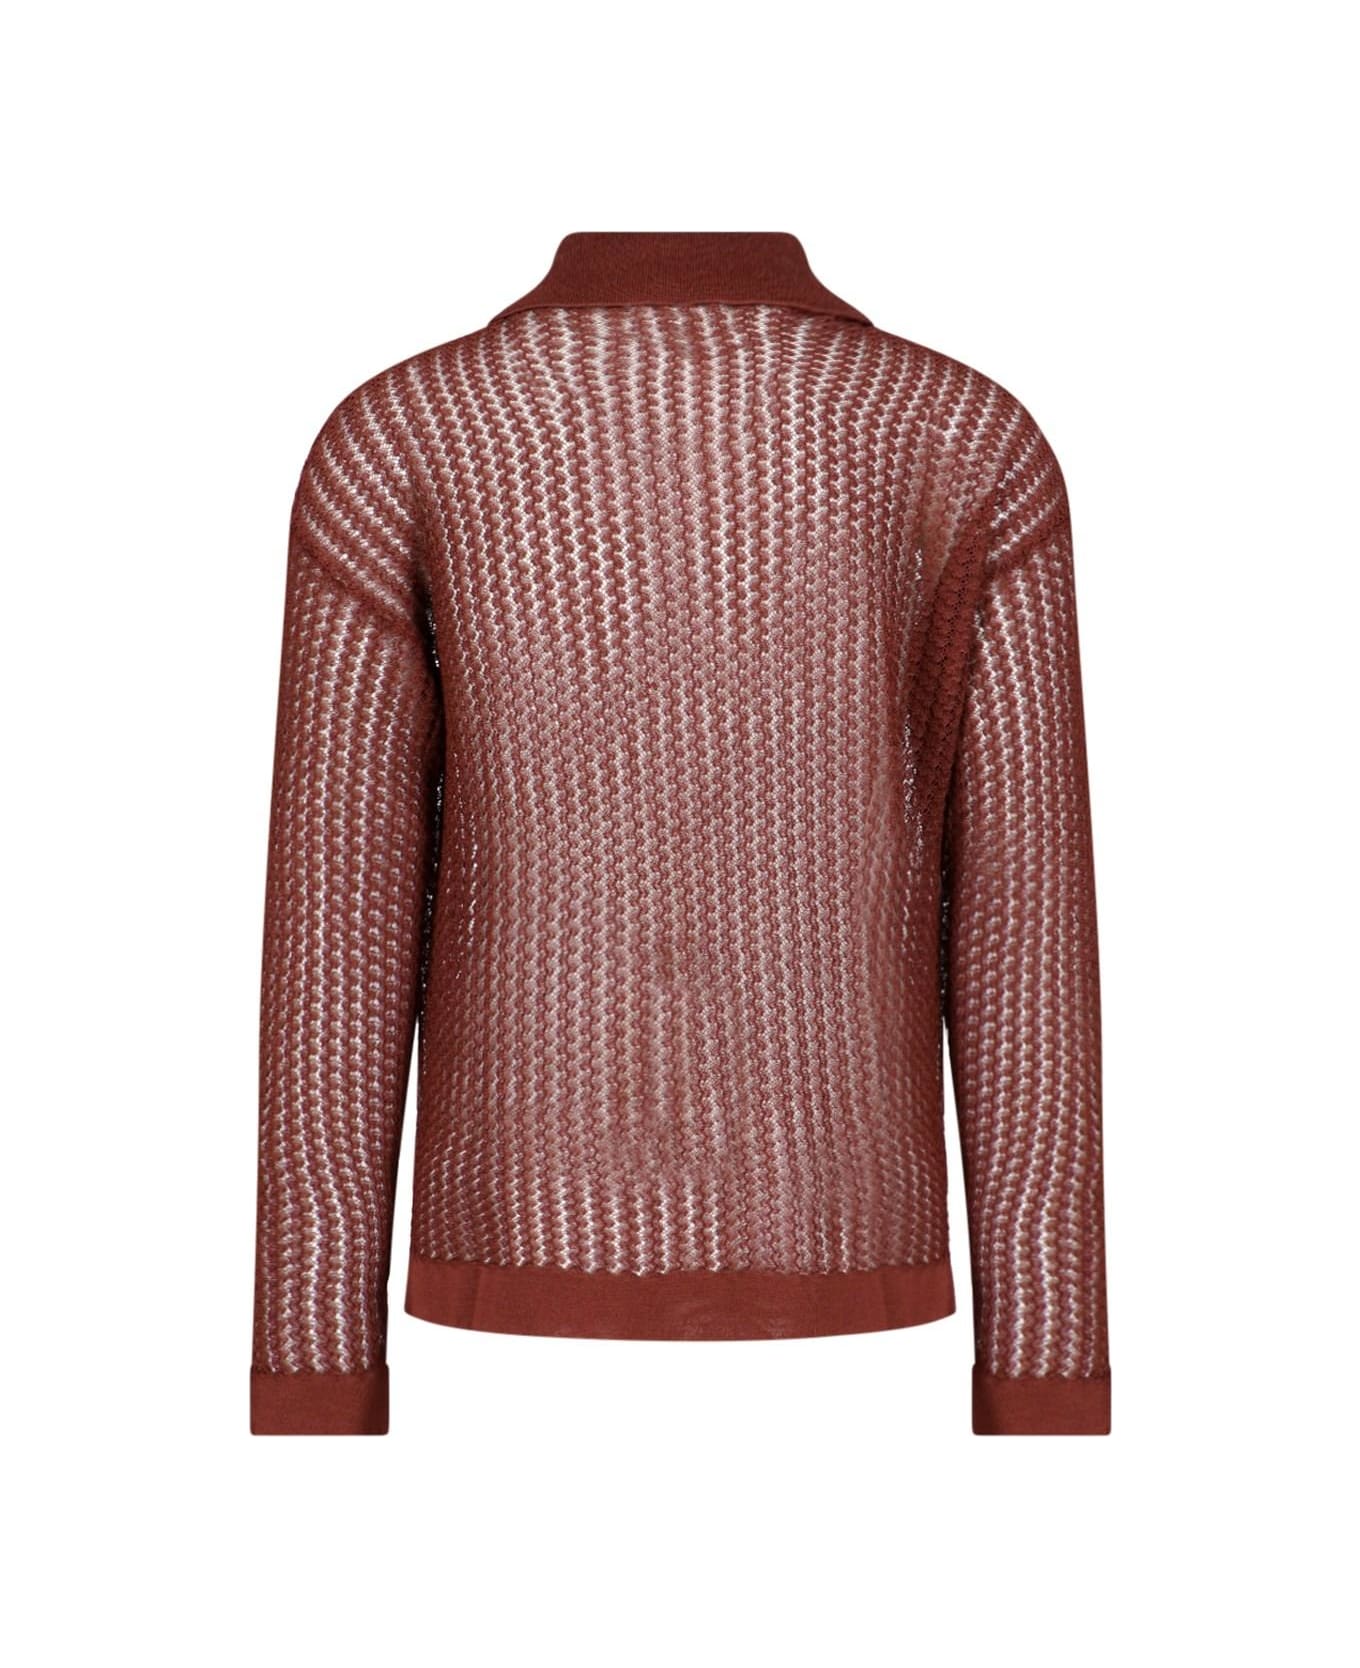 Bonsai Openwork Sweater - Brown ニットウェア